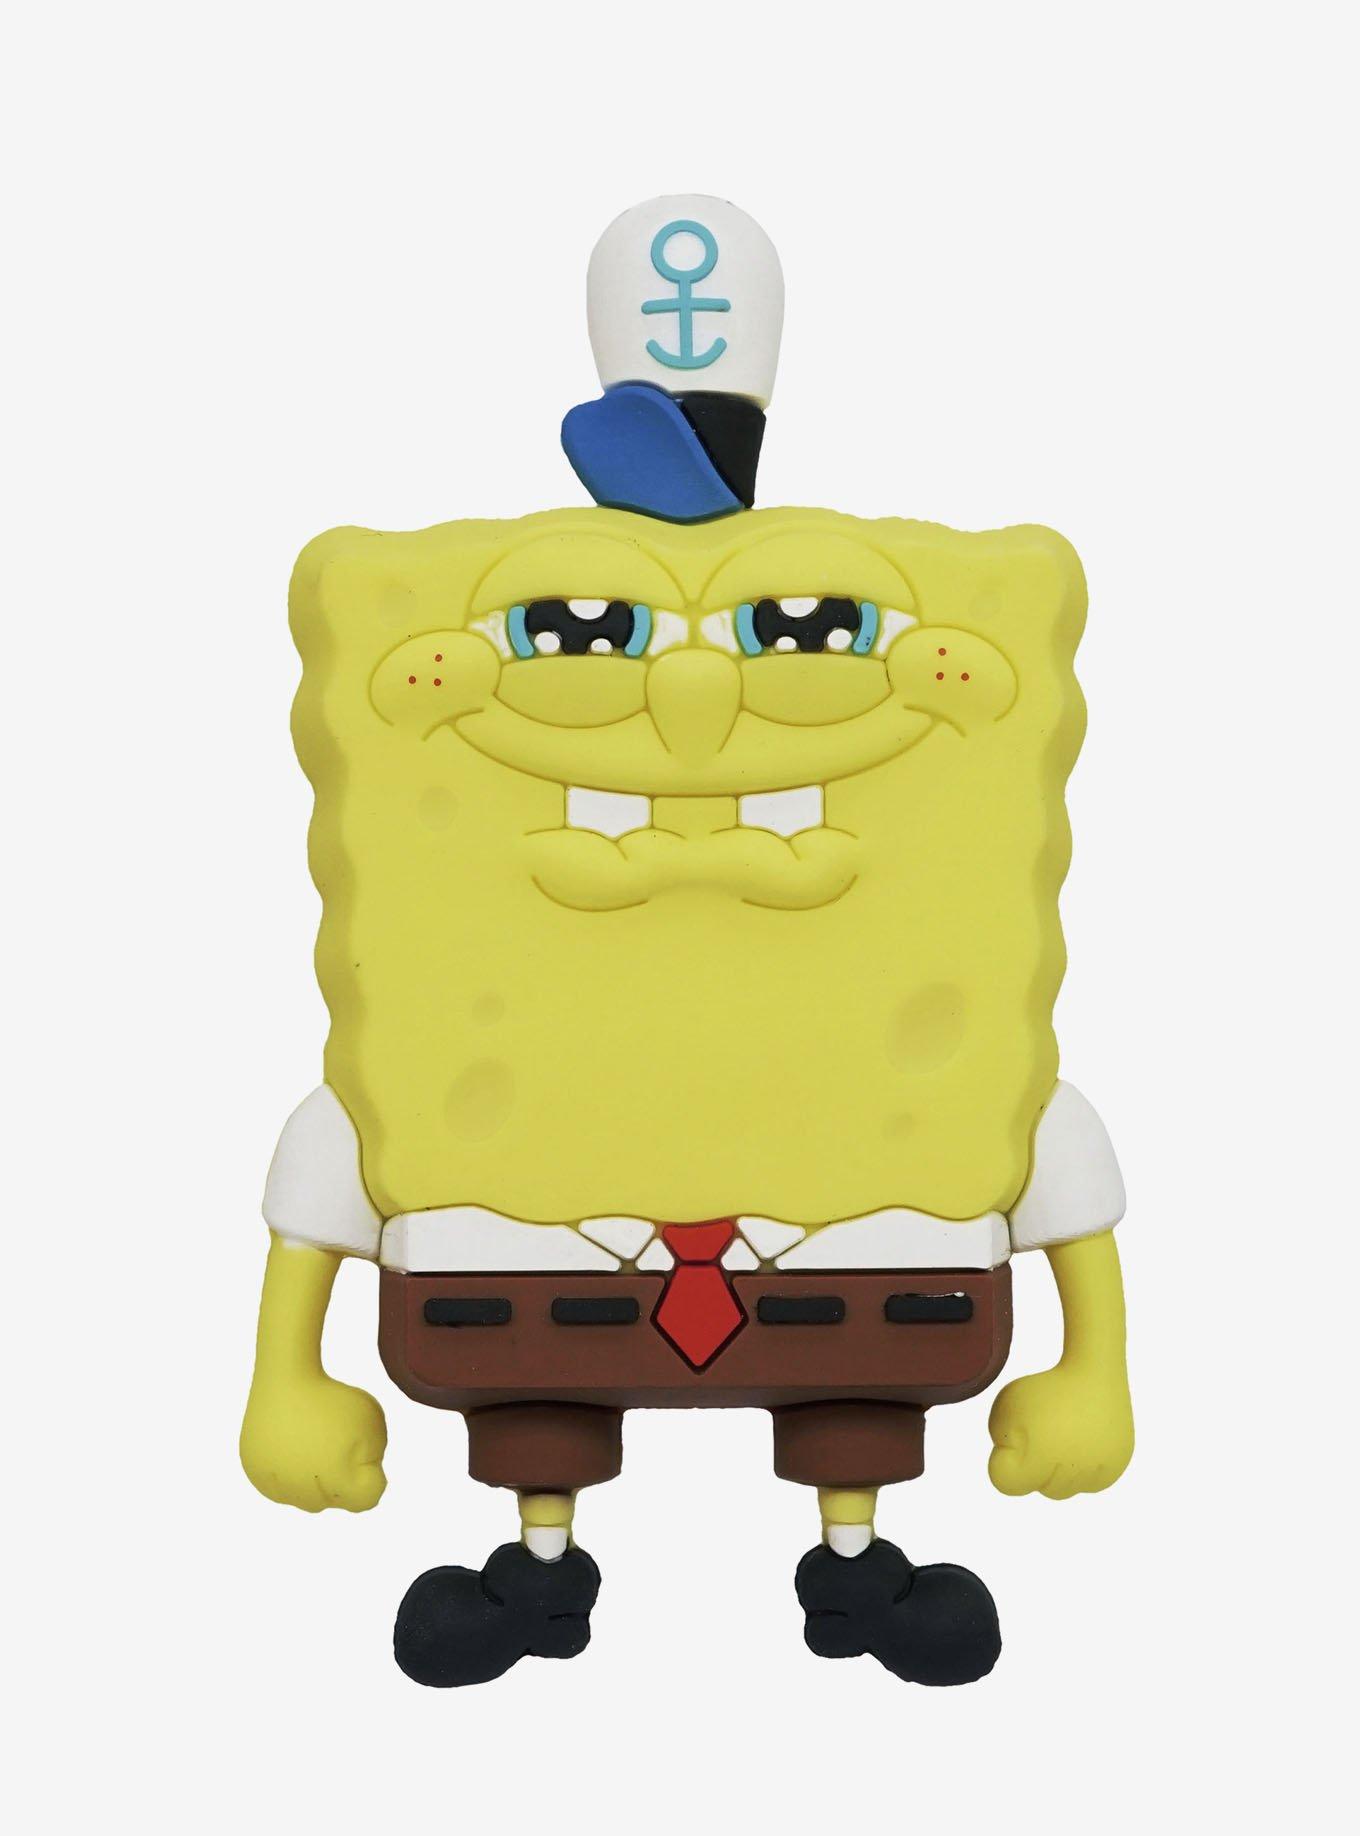 spongebob crusty lips